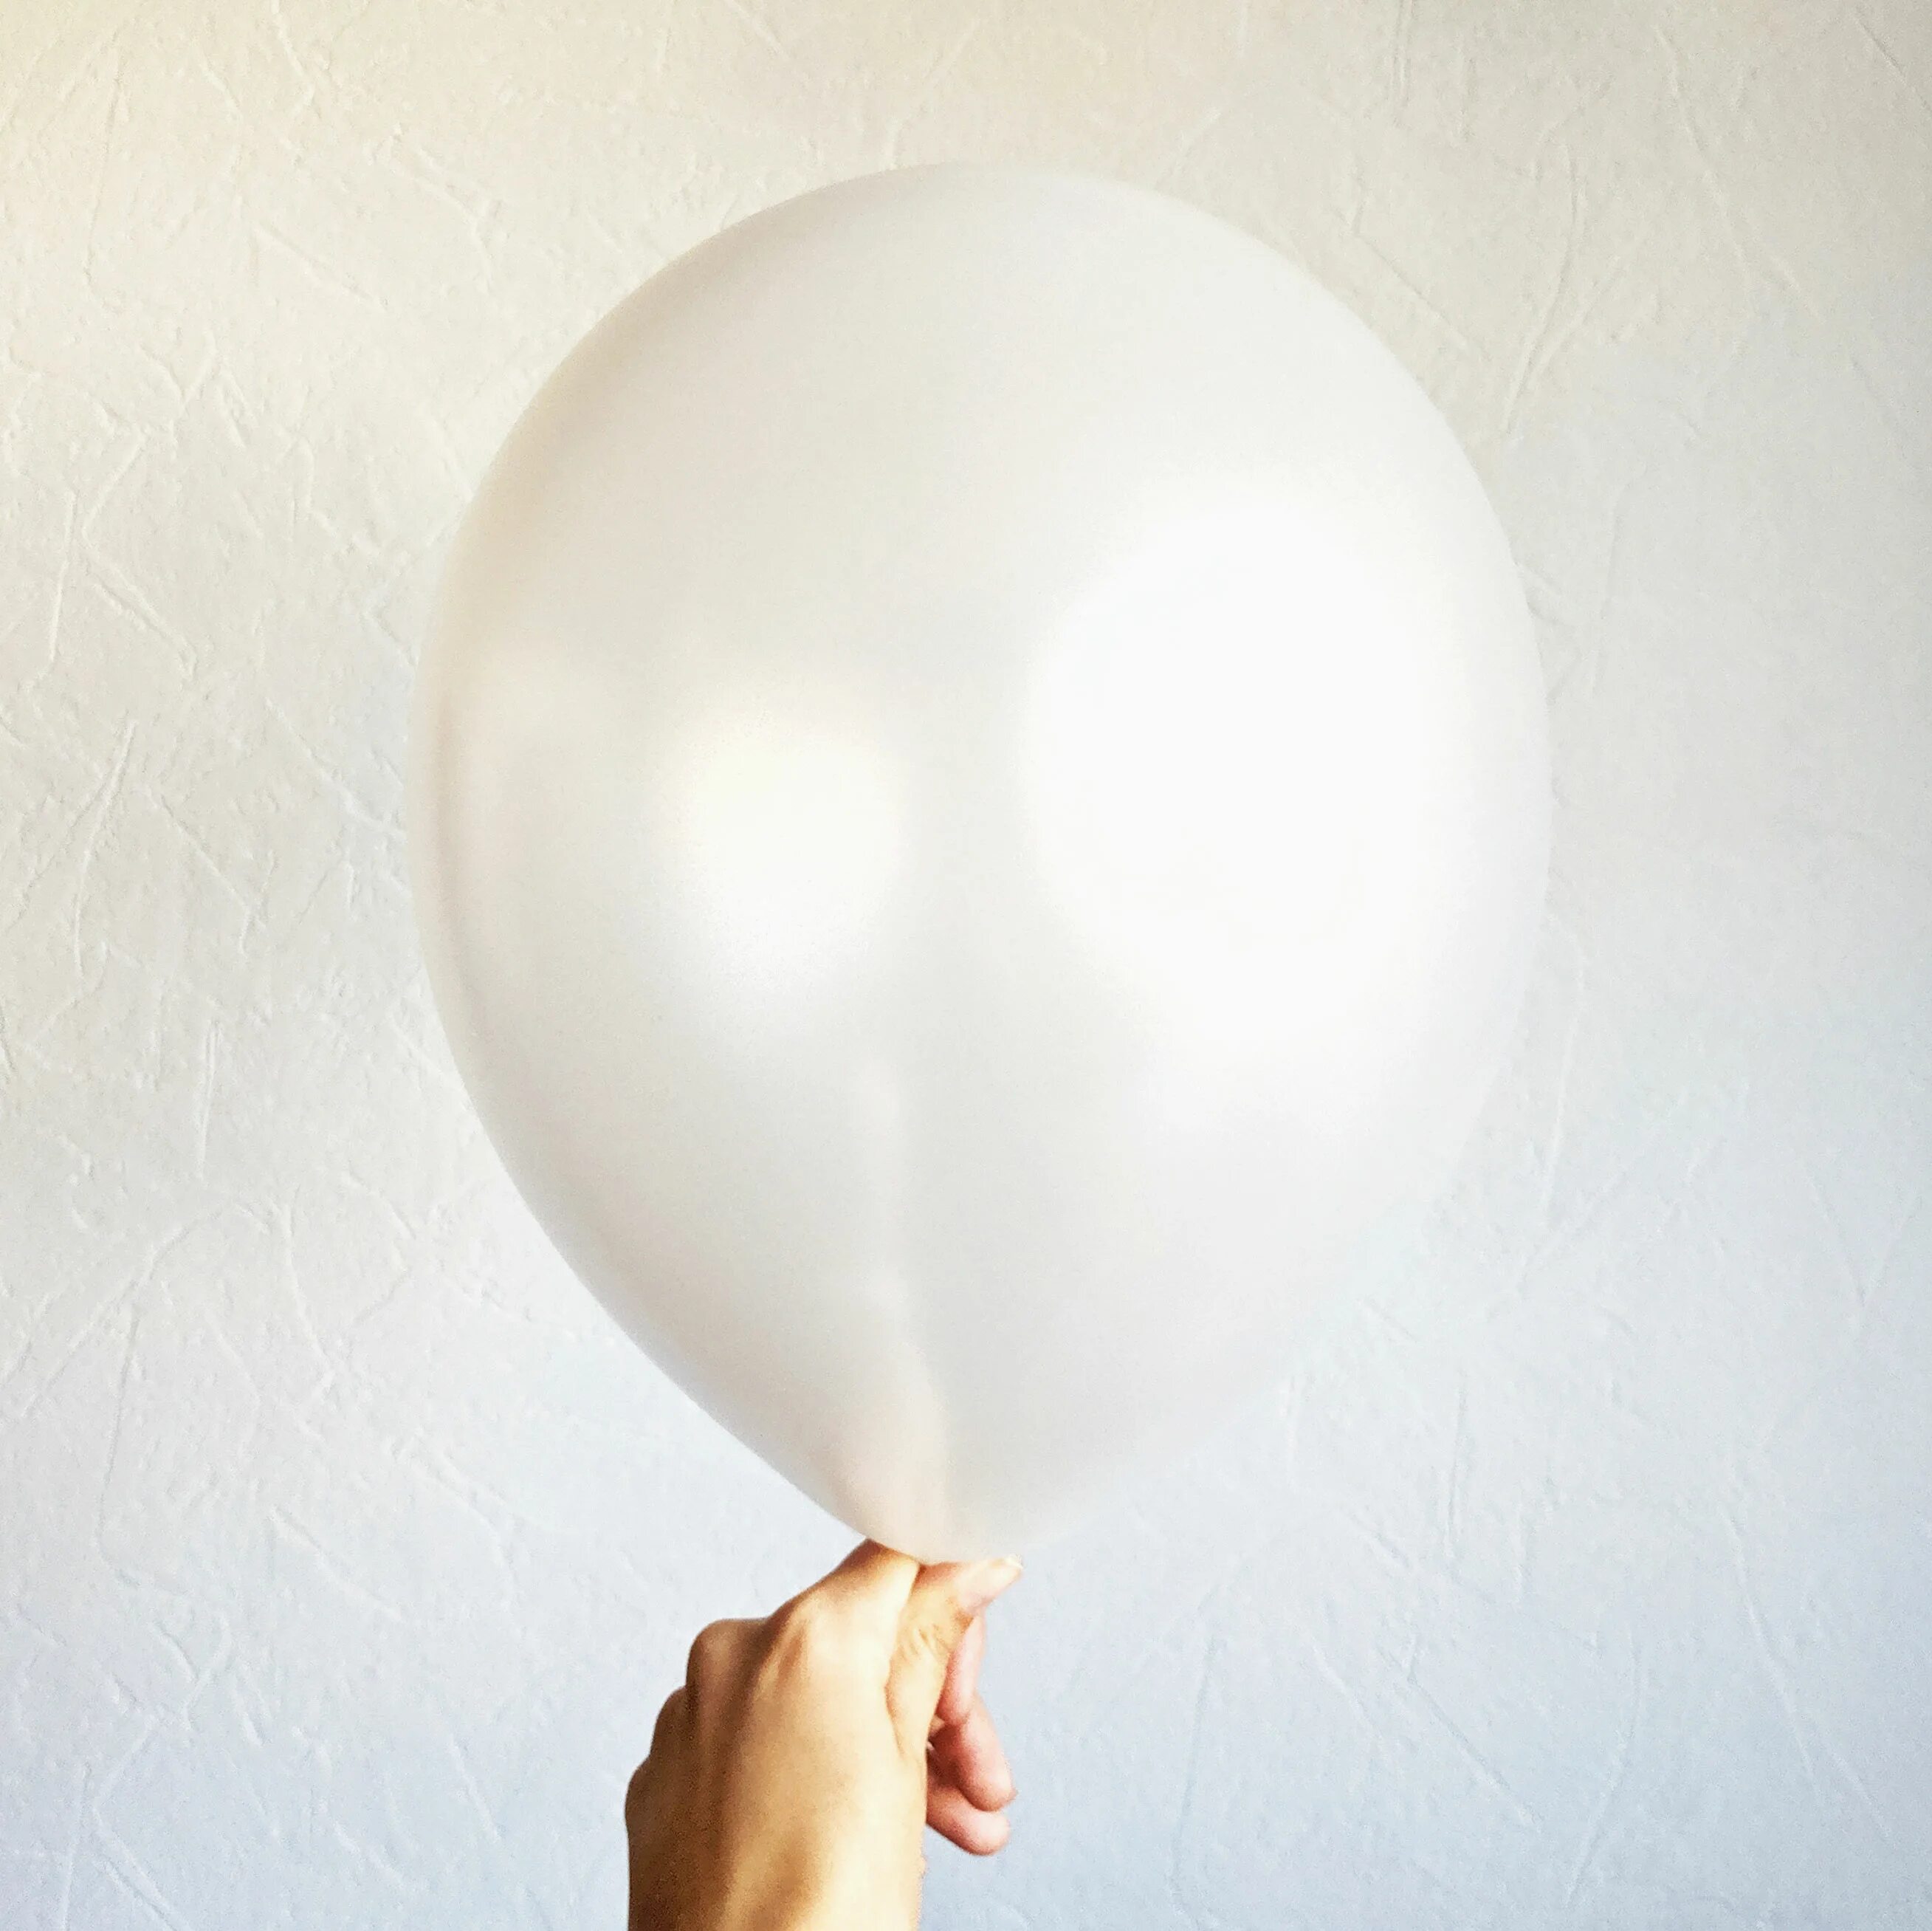 Цвет шара белый. Шар белый, перламутр / White 072. Белый шарик. Белый шар гигантский. Круглый воздушный шар белый.